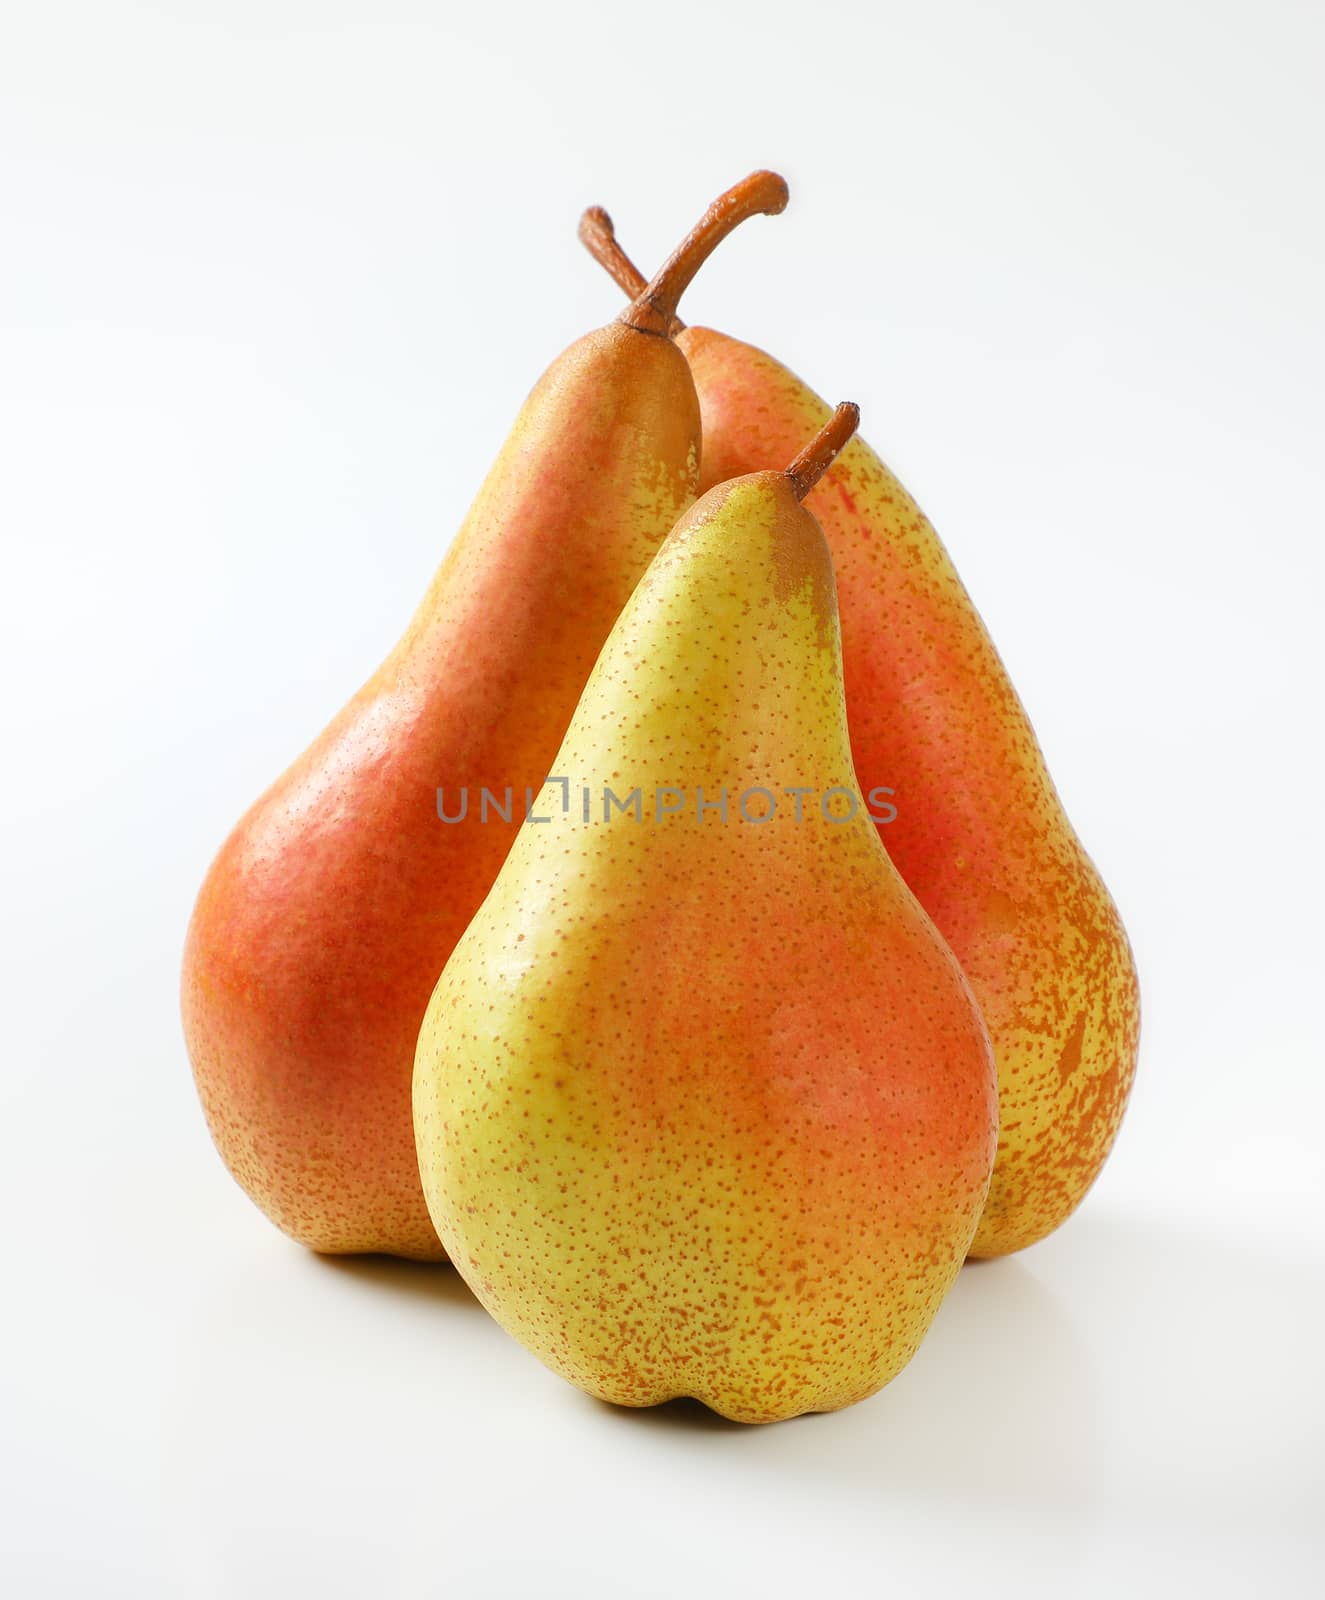 three ripe pears by Digifoodstock